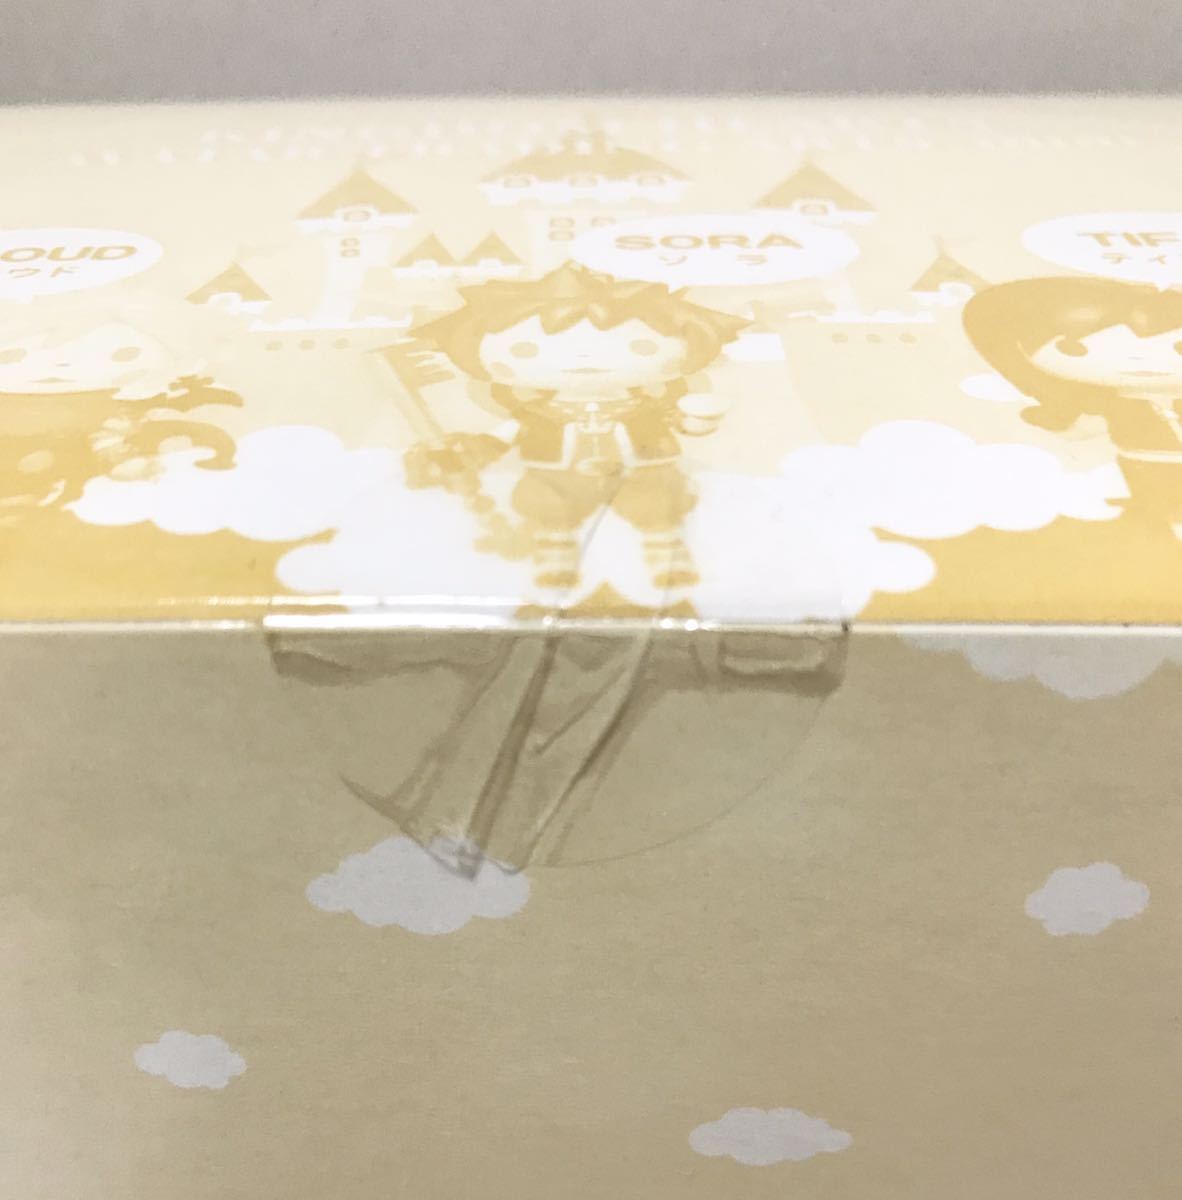  Kingdom Hearts avatar trailing a- loading ni large box unopened 9 piece entering Final Fantasy k loud tifa other 